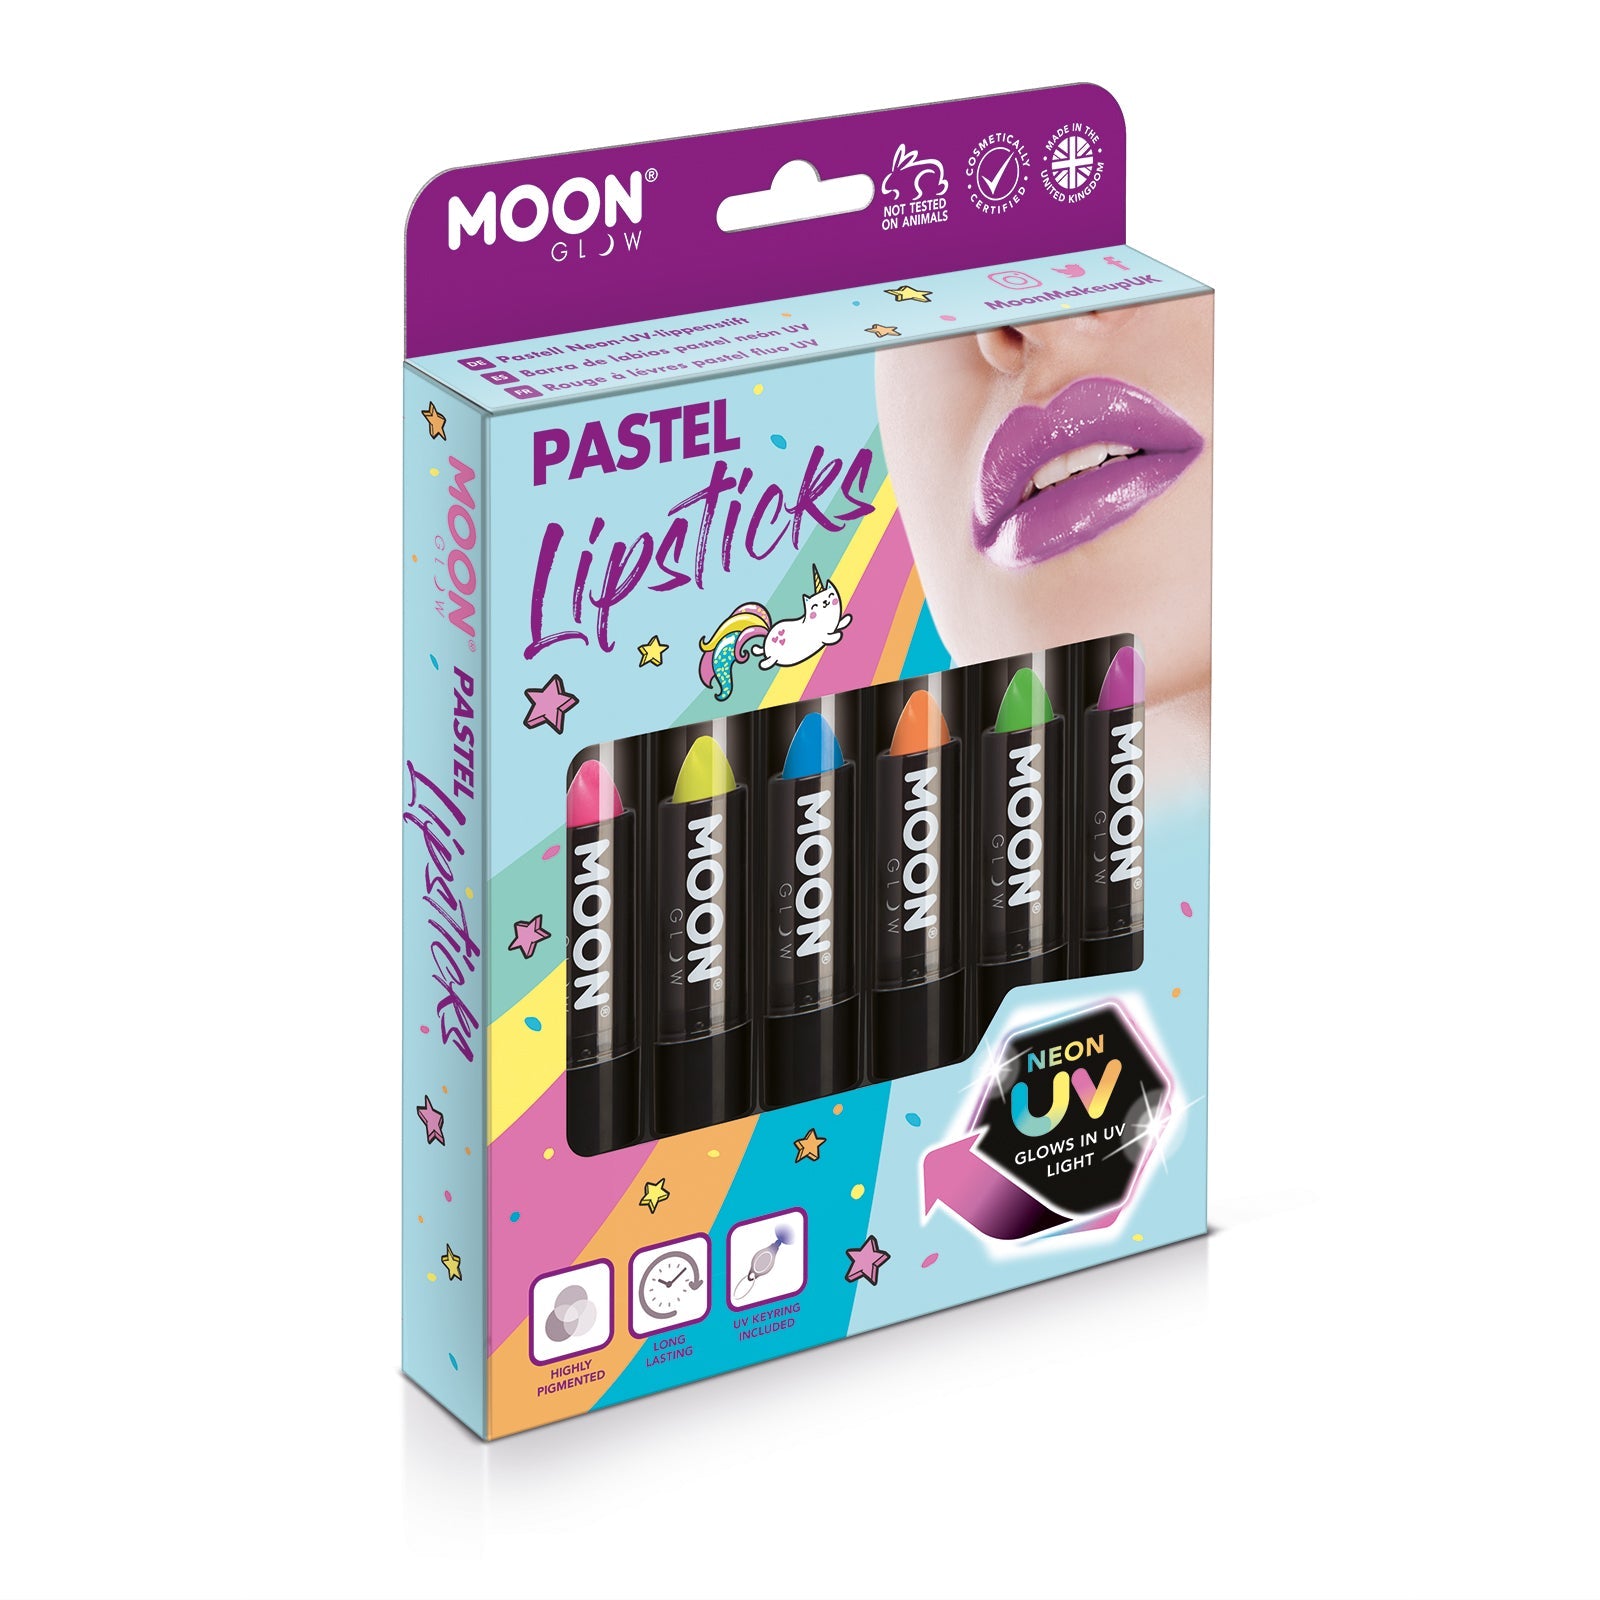 Pastel Neon UV Glow Blacklight Lipstick Boxset - 6 lipsticks, UV light. Cosmetically certified, FDA & Health Canada compliant and cruelty free.